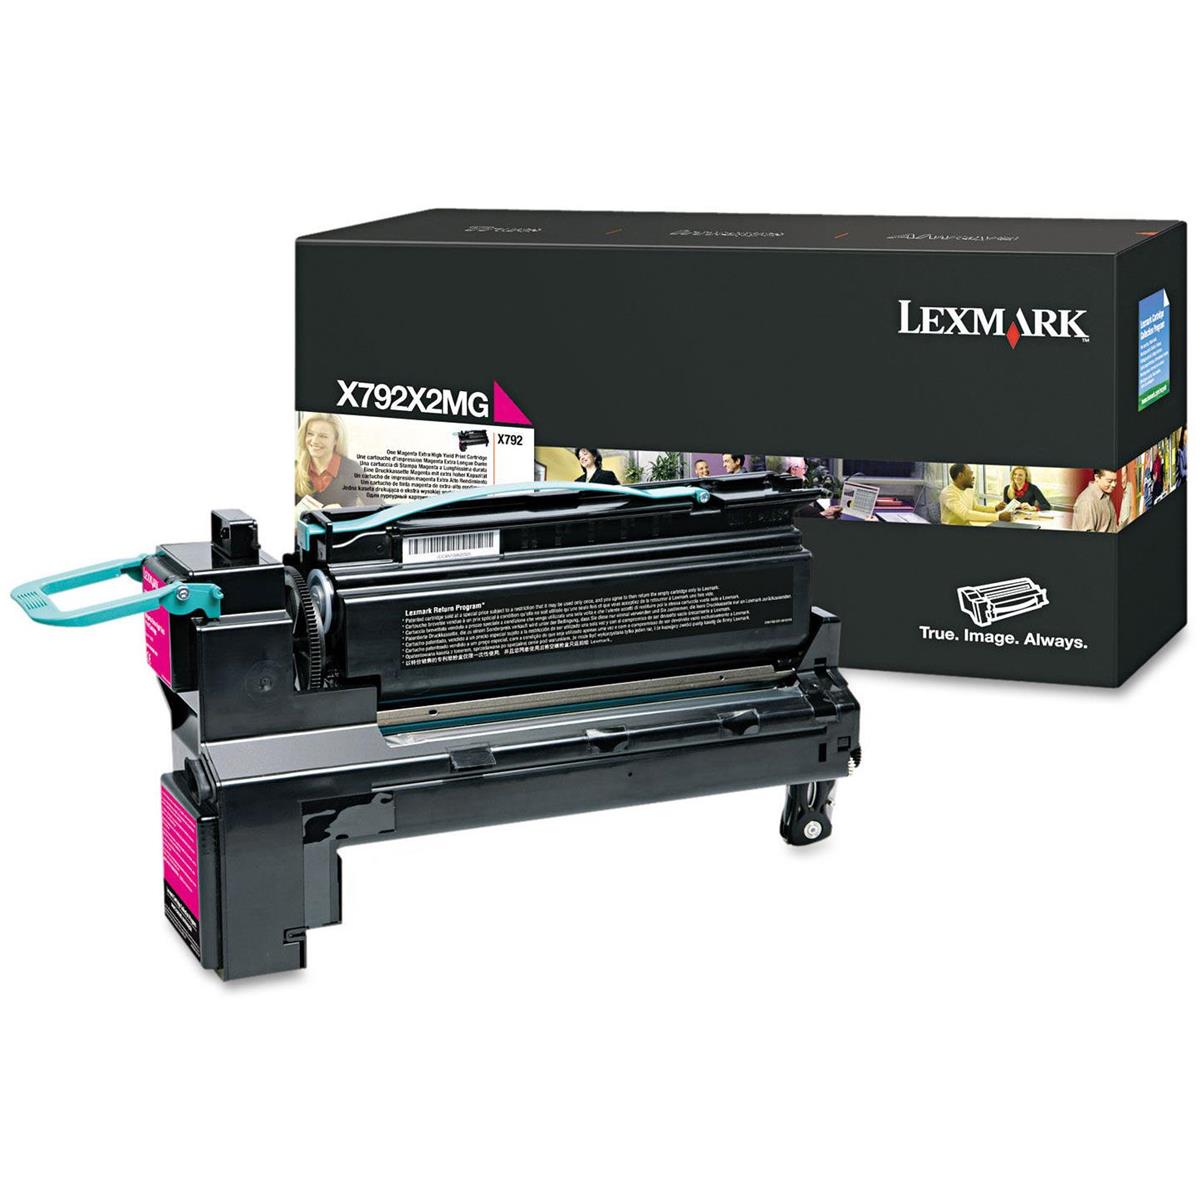 

Lexmark Magenta Extra High Yield Print Laser Toner Cartridge for X792 Printers